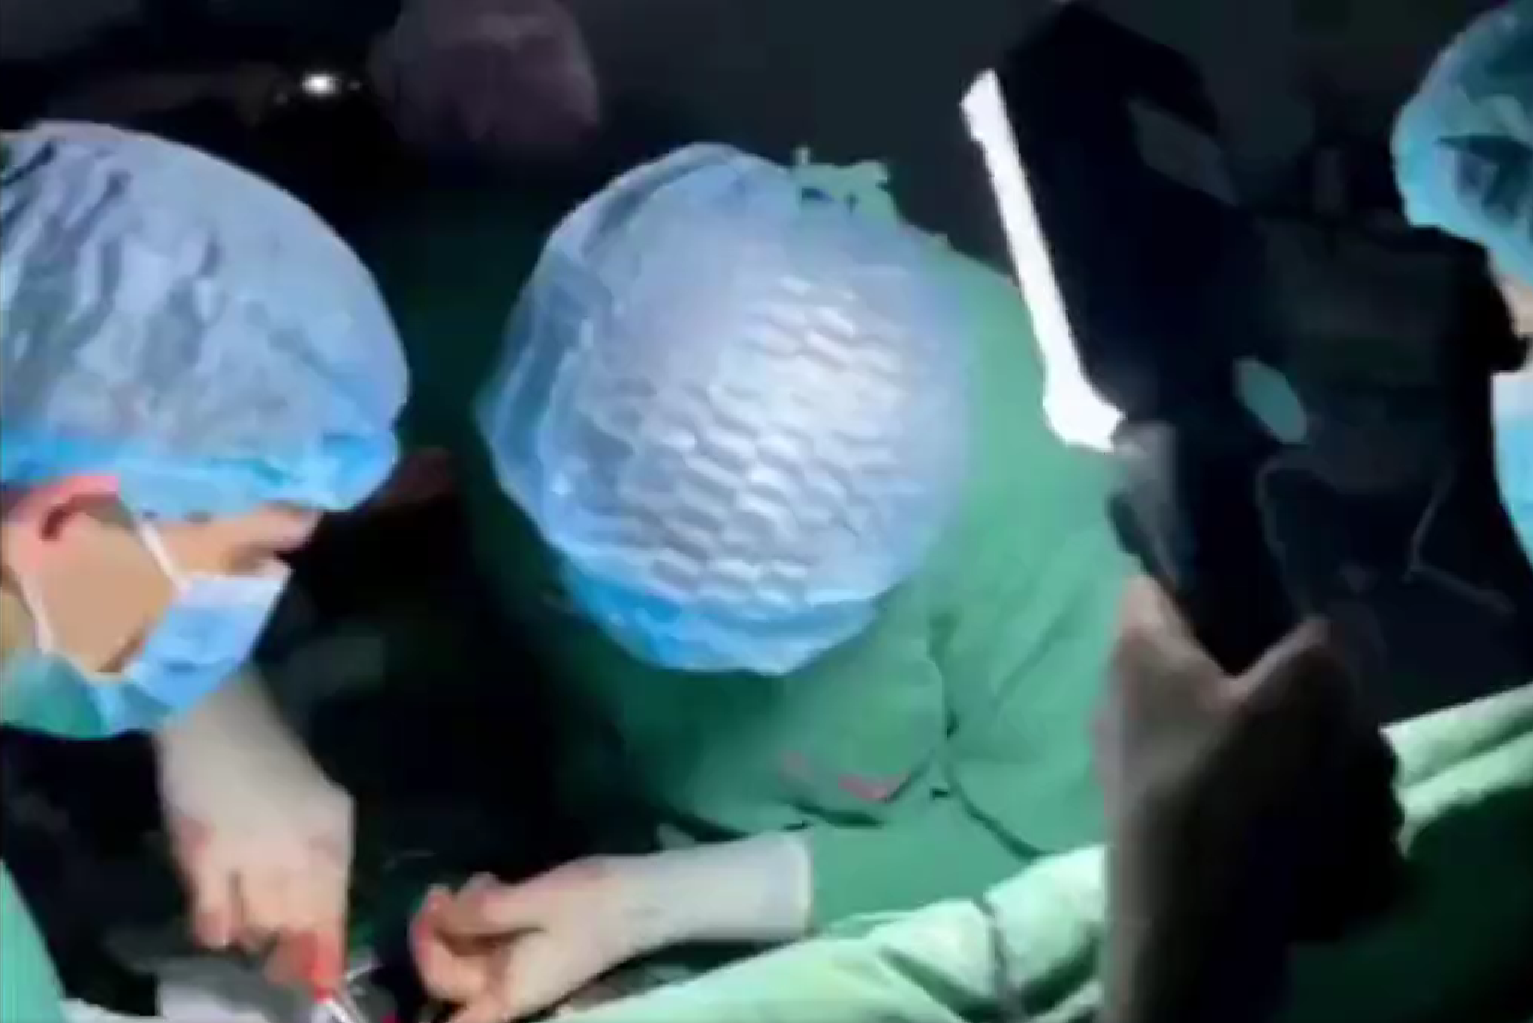 Ukrainian doctors perform life-saving heart surgery on child during ‘blackout’ in Kiev hospital